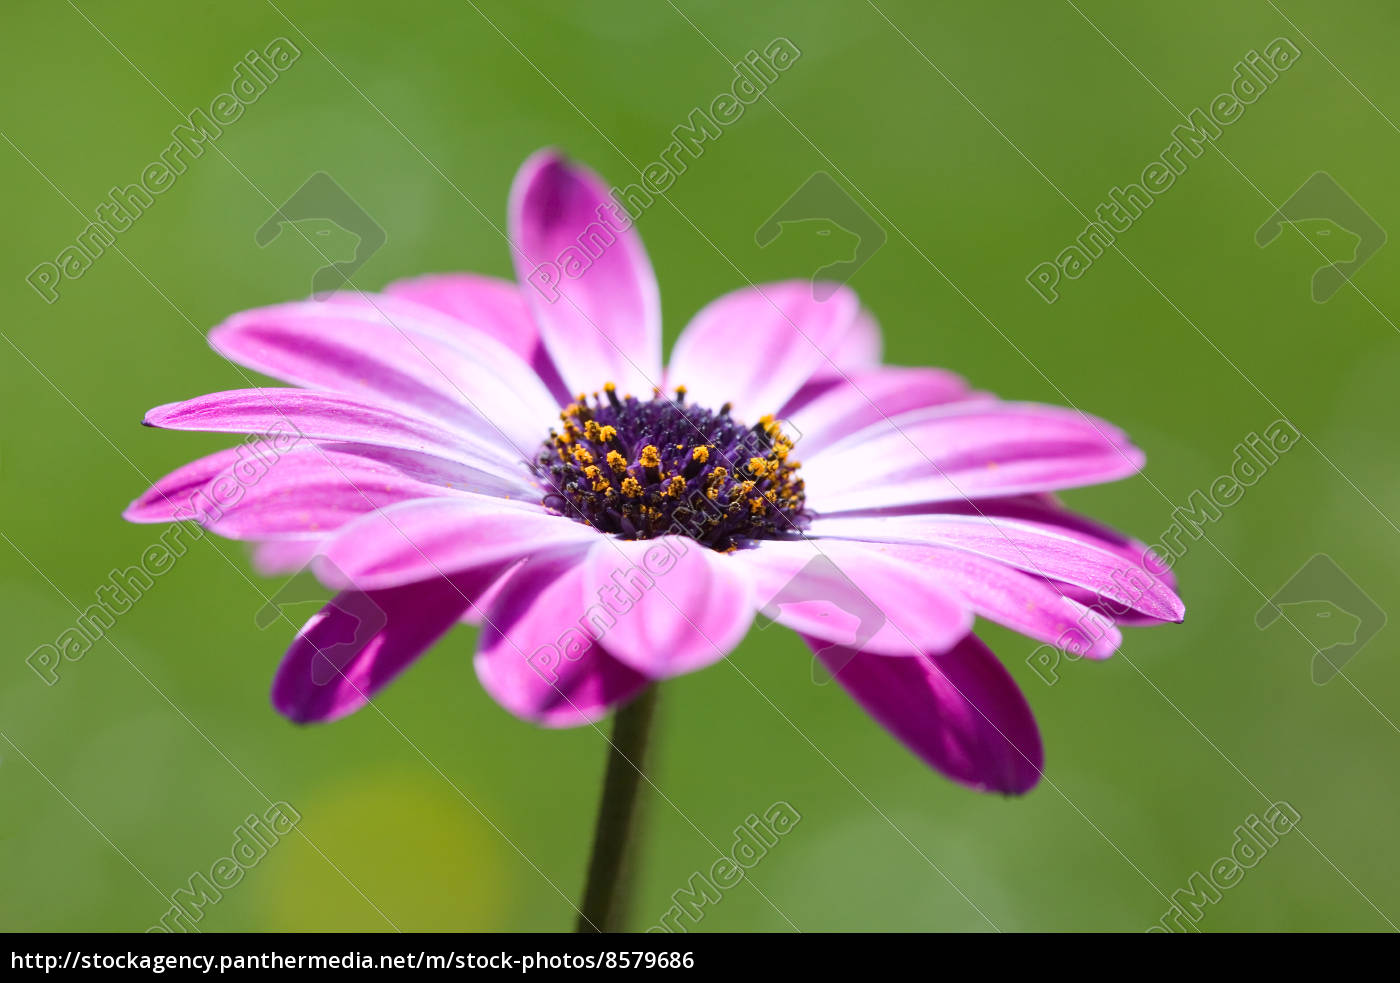 Purple Osteospermum African Daisy Stock Image 8579686 Panthermedia Stock Agency